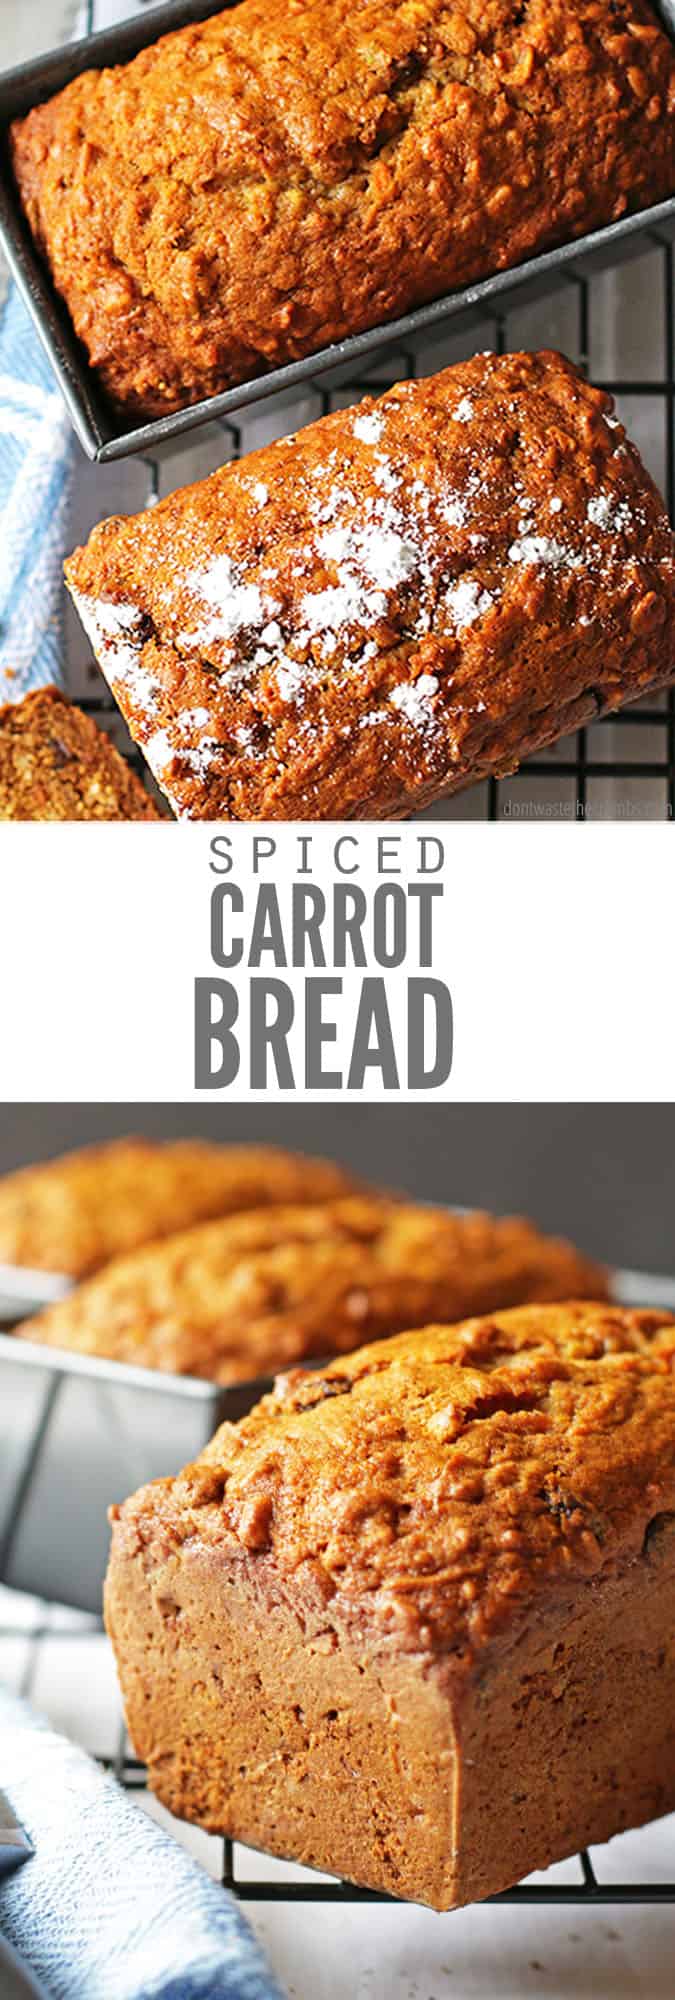 Spiced Carrot Bread: Breakfast & Dessert Recipe (+ Video)